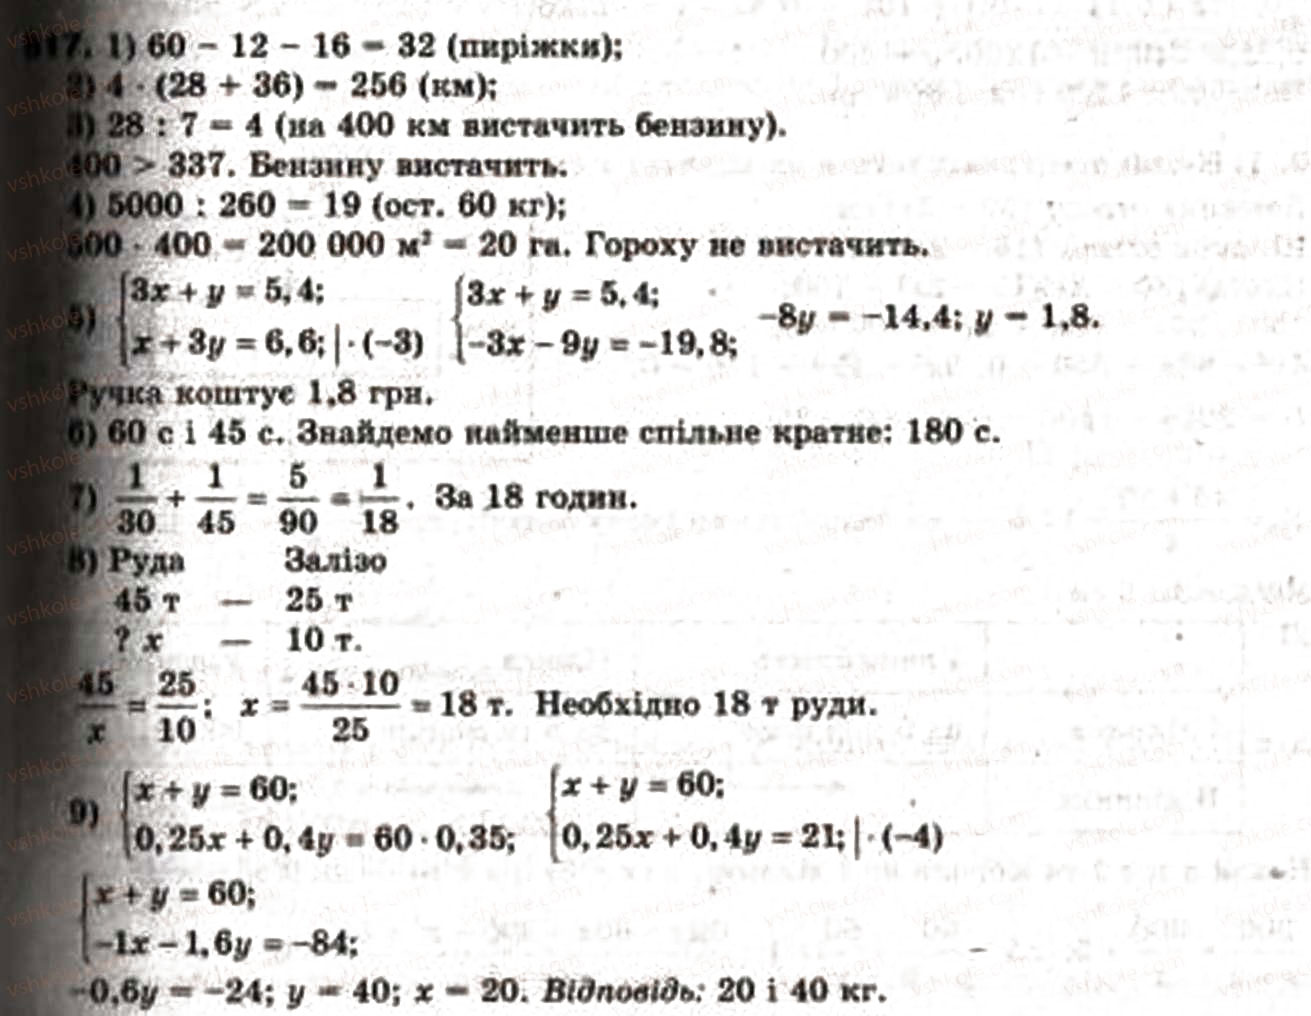 Завдання № 517 - 15. Математичне моделювання - ГДЗ Алгебра 9 клас А.Г. Мерзляк, В.Б. Полонський, М.С. Якір 2009